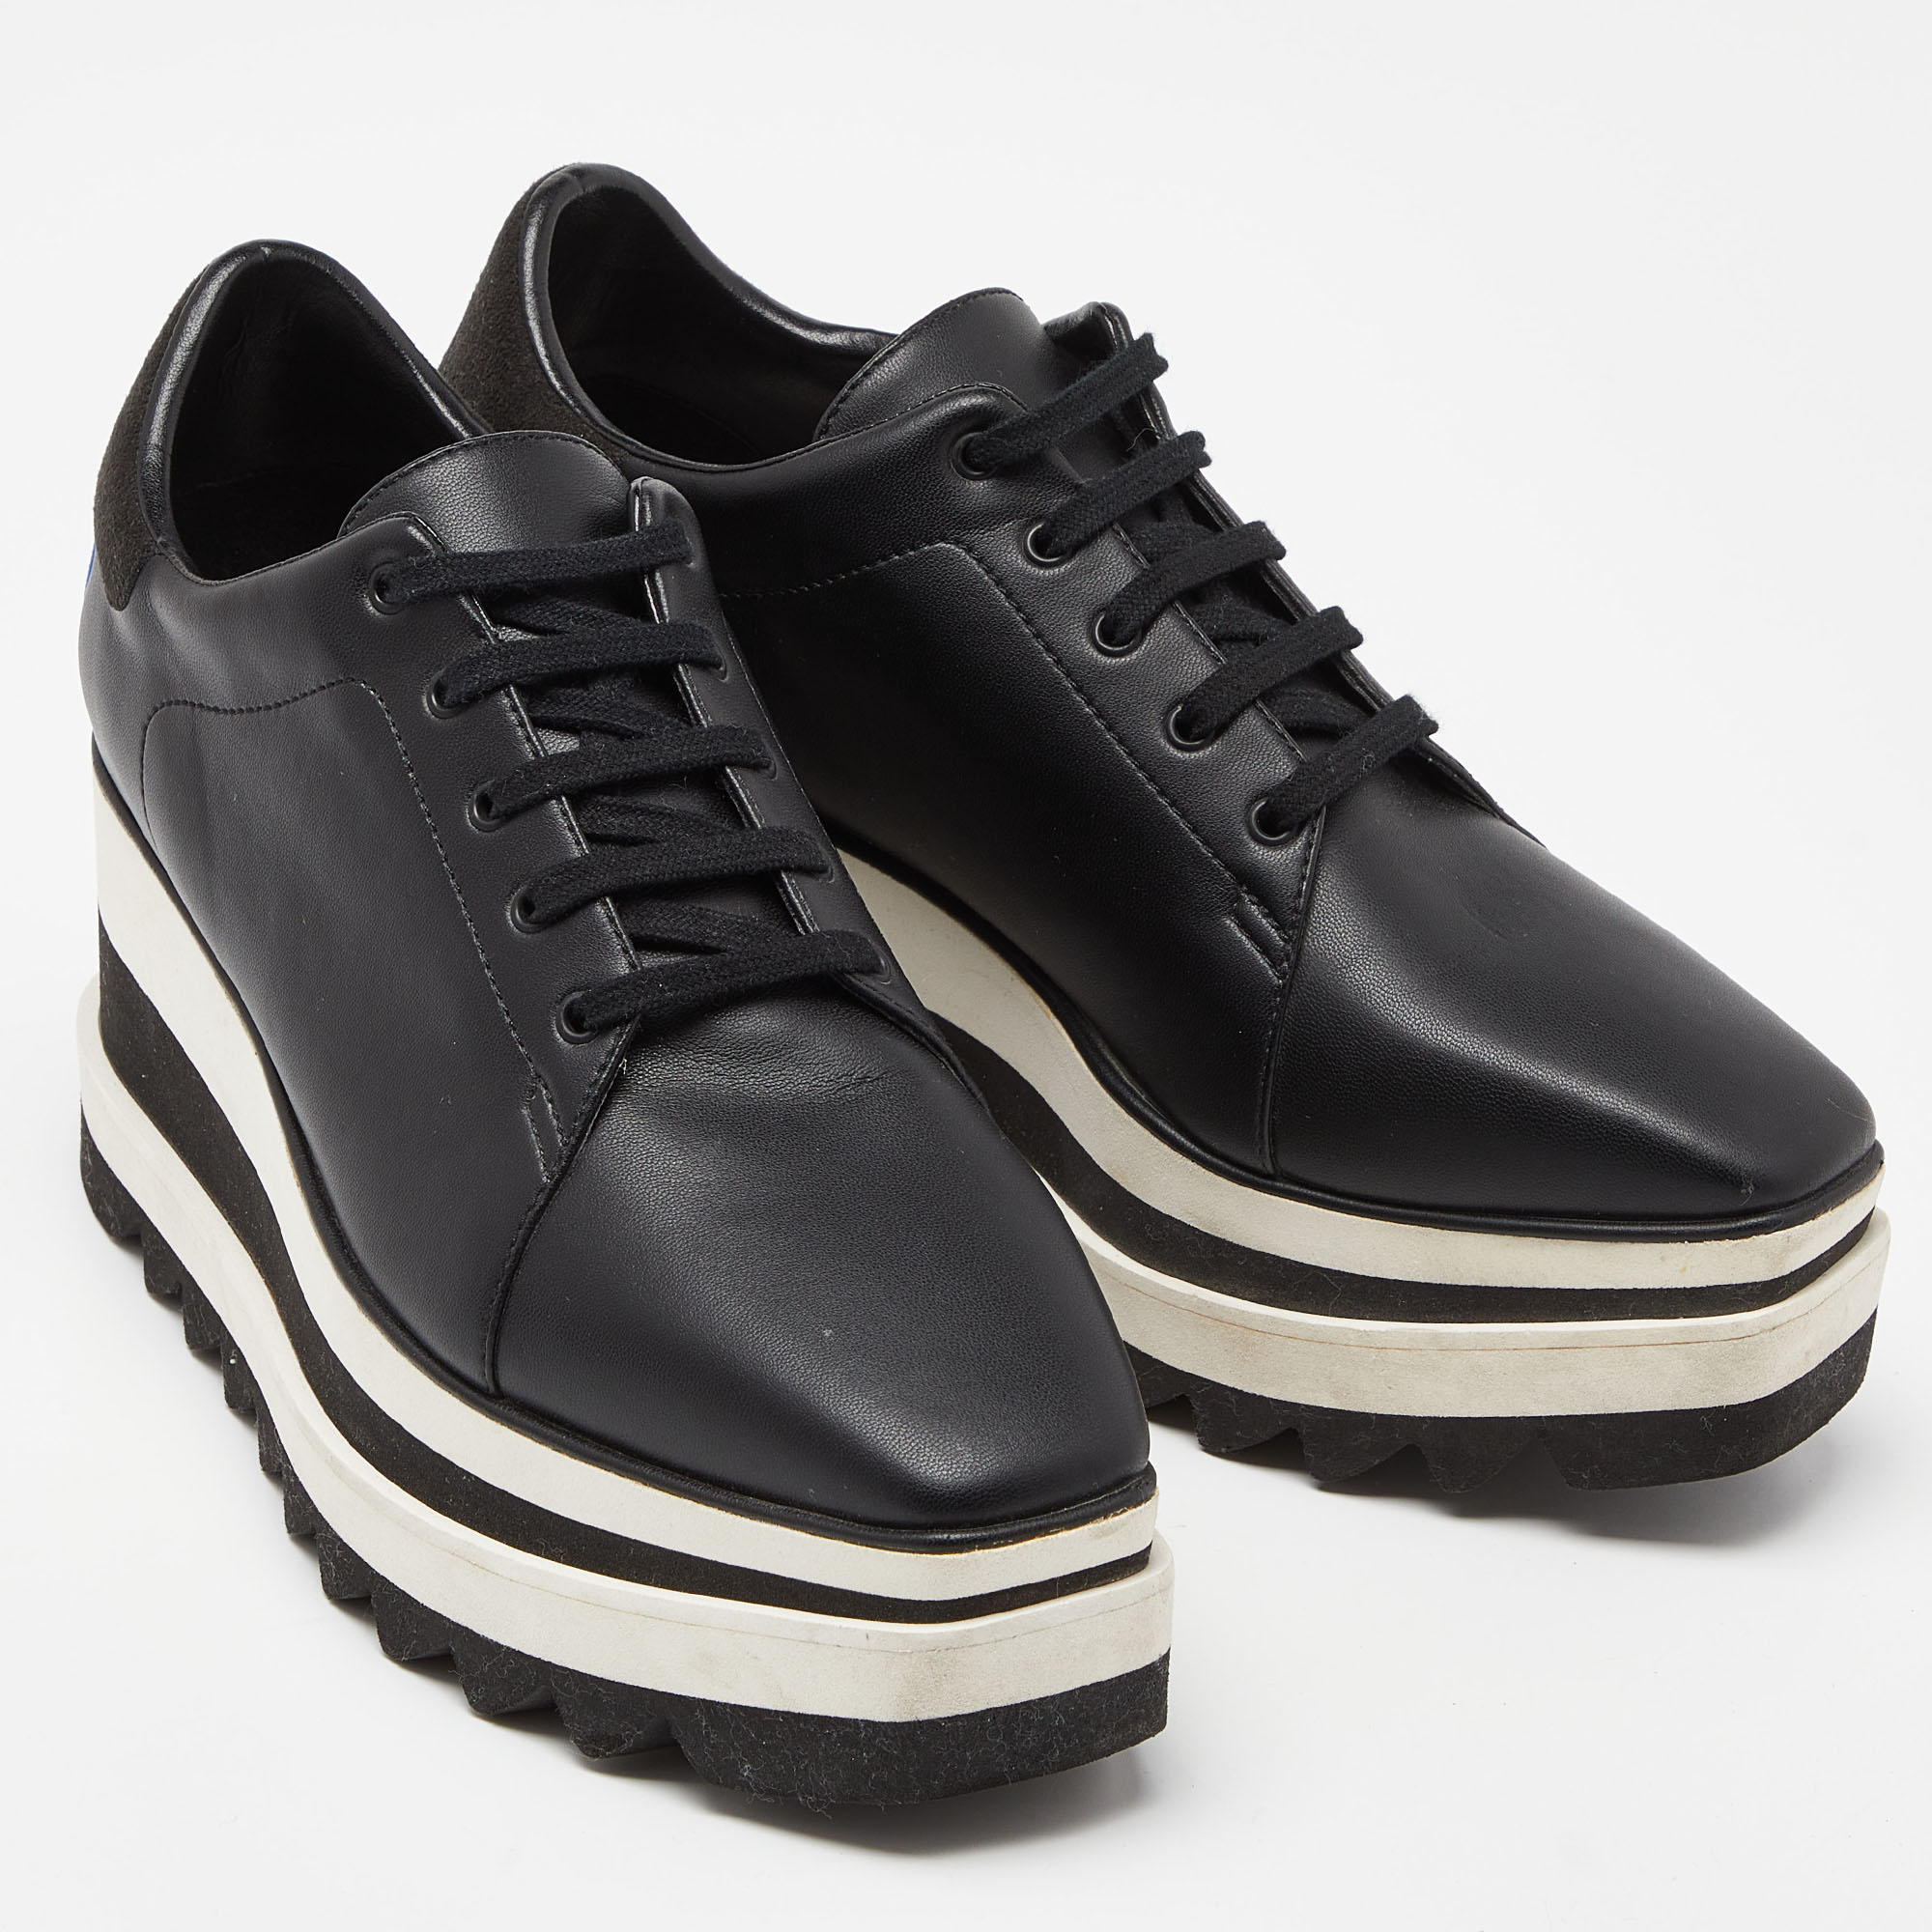 Stella McCartney Black Faux Leather Platform Sneakers Size 38